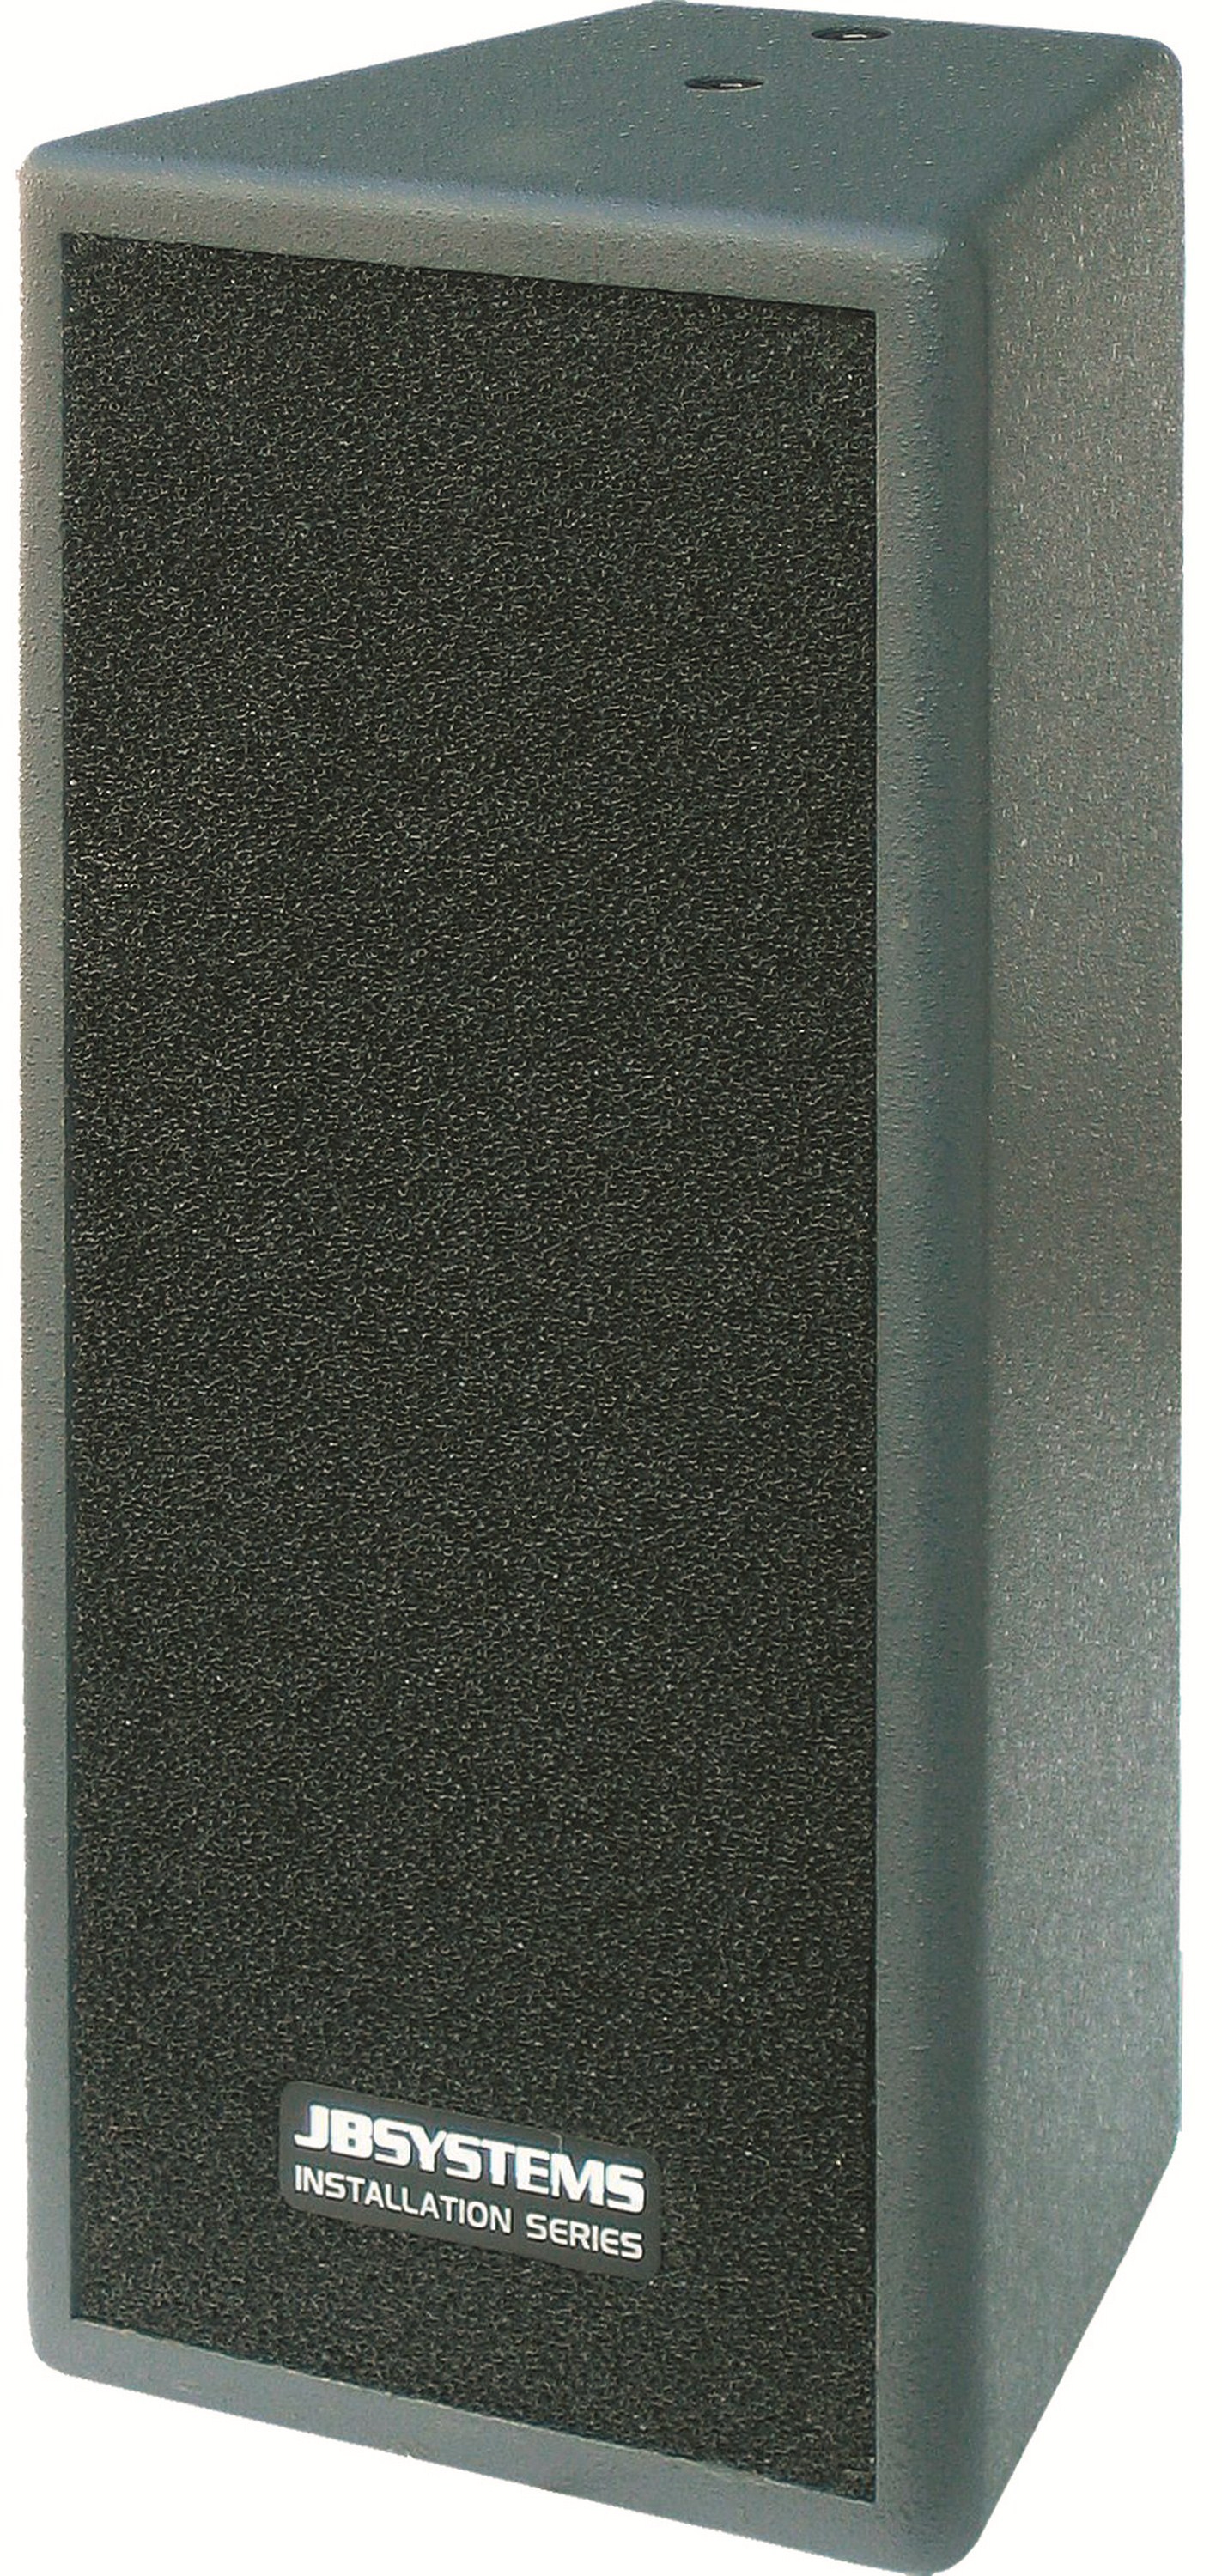 Sattelite speaker 2x 5": 160Wrms / 8ohm